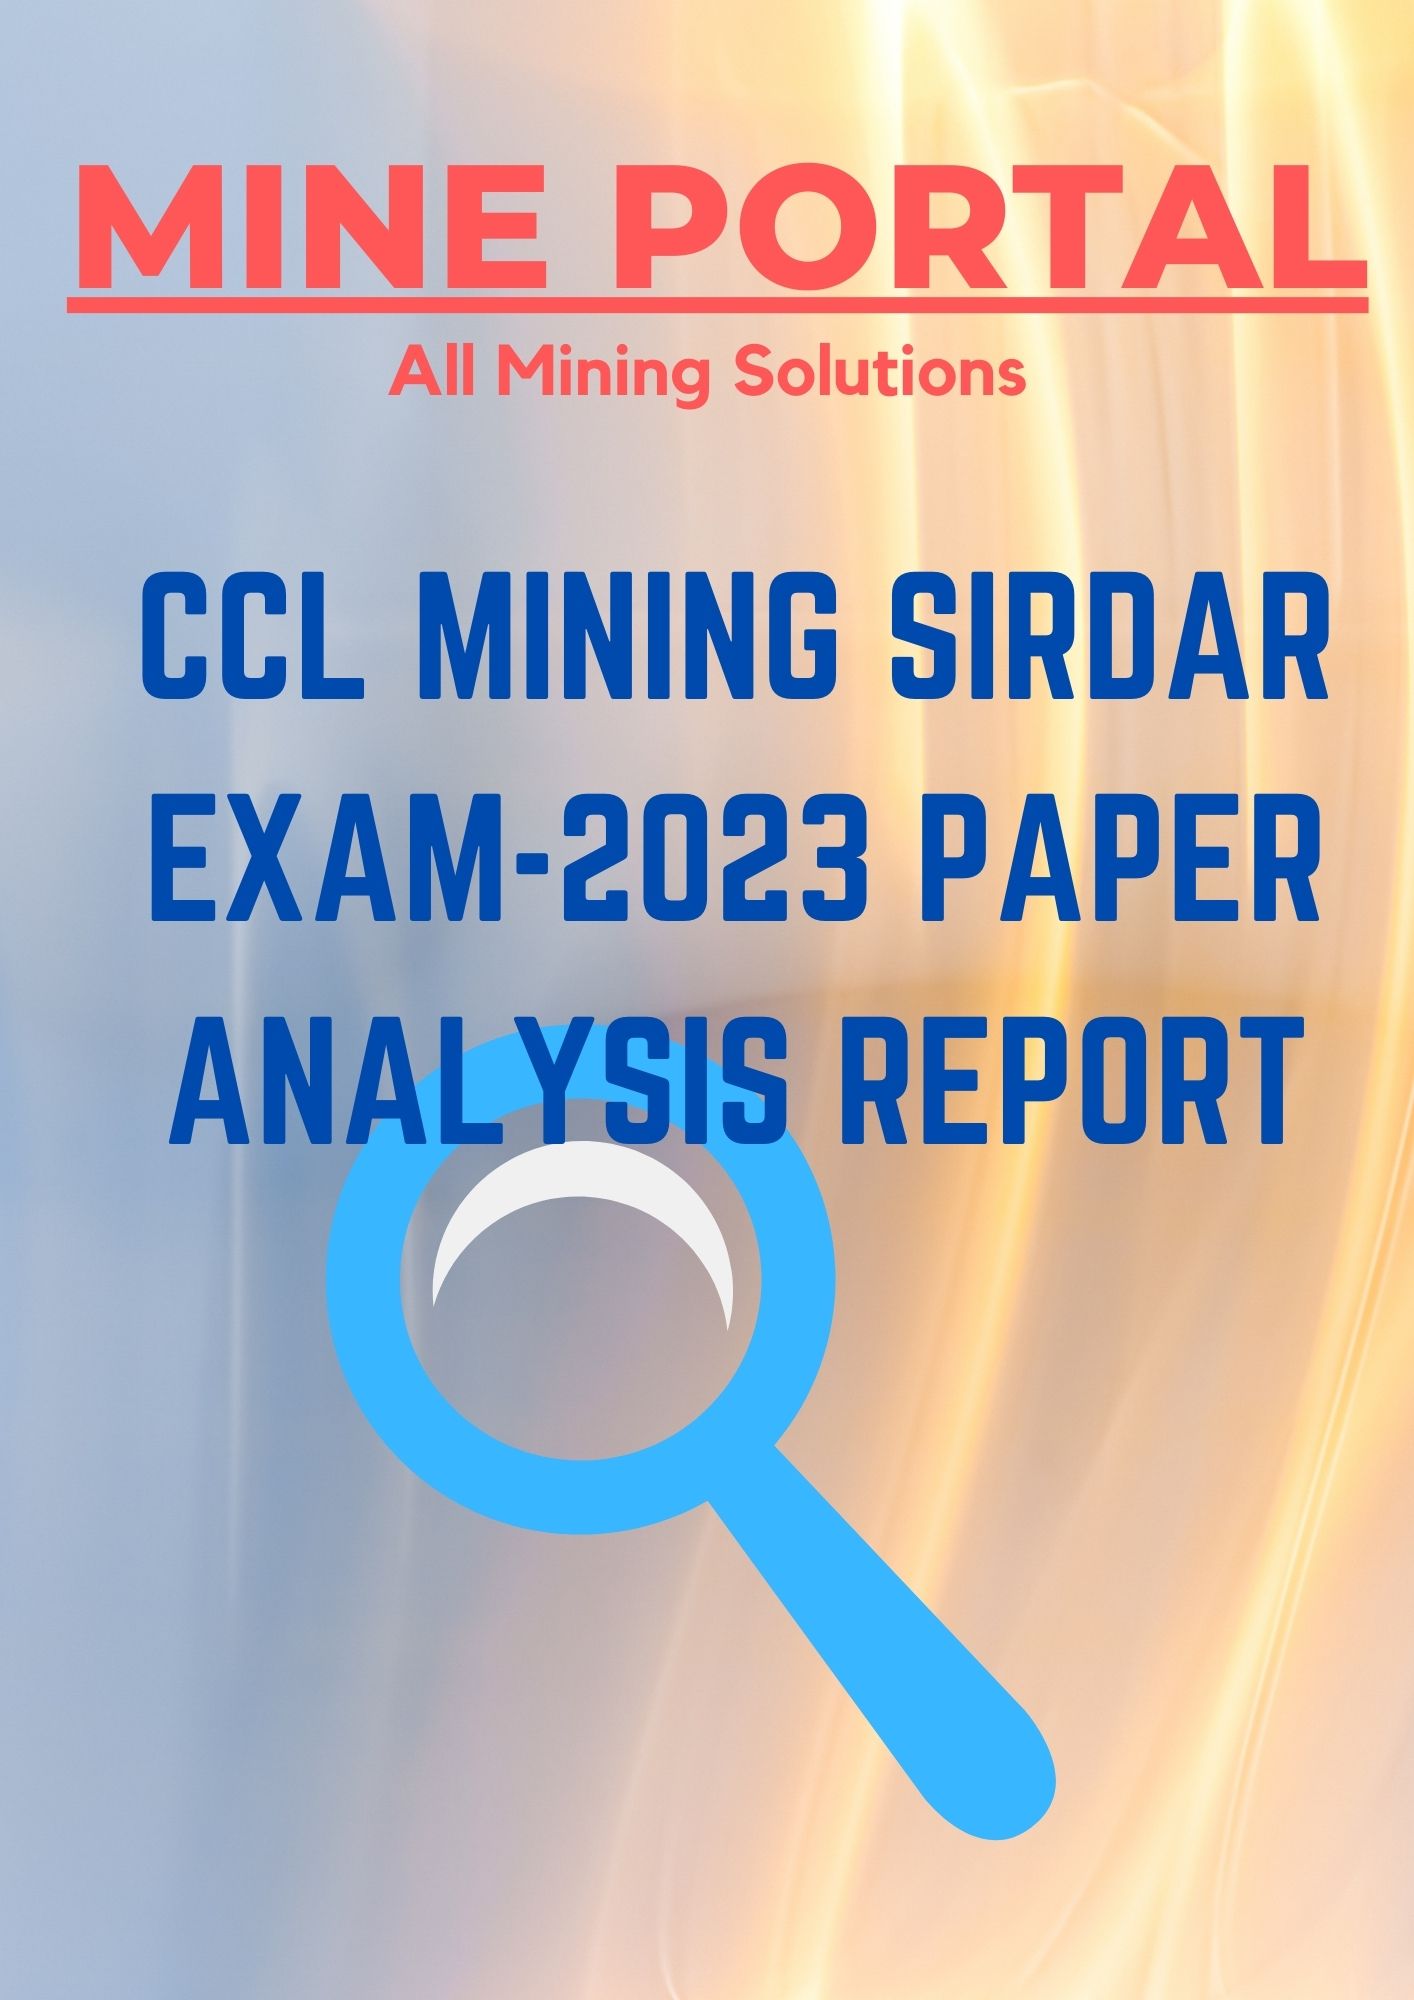 CCL MINING SIRDAR EXAM-2023 PAPER ANALYSIS REPORT